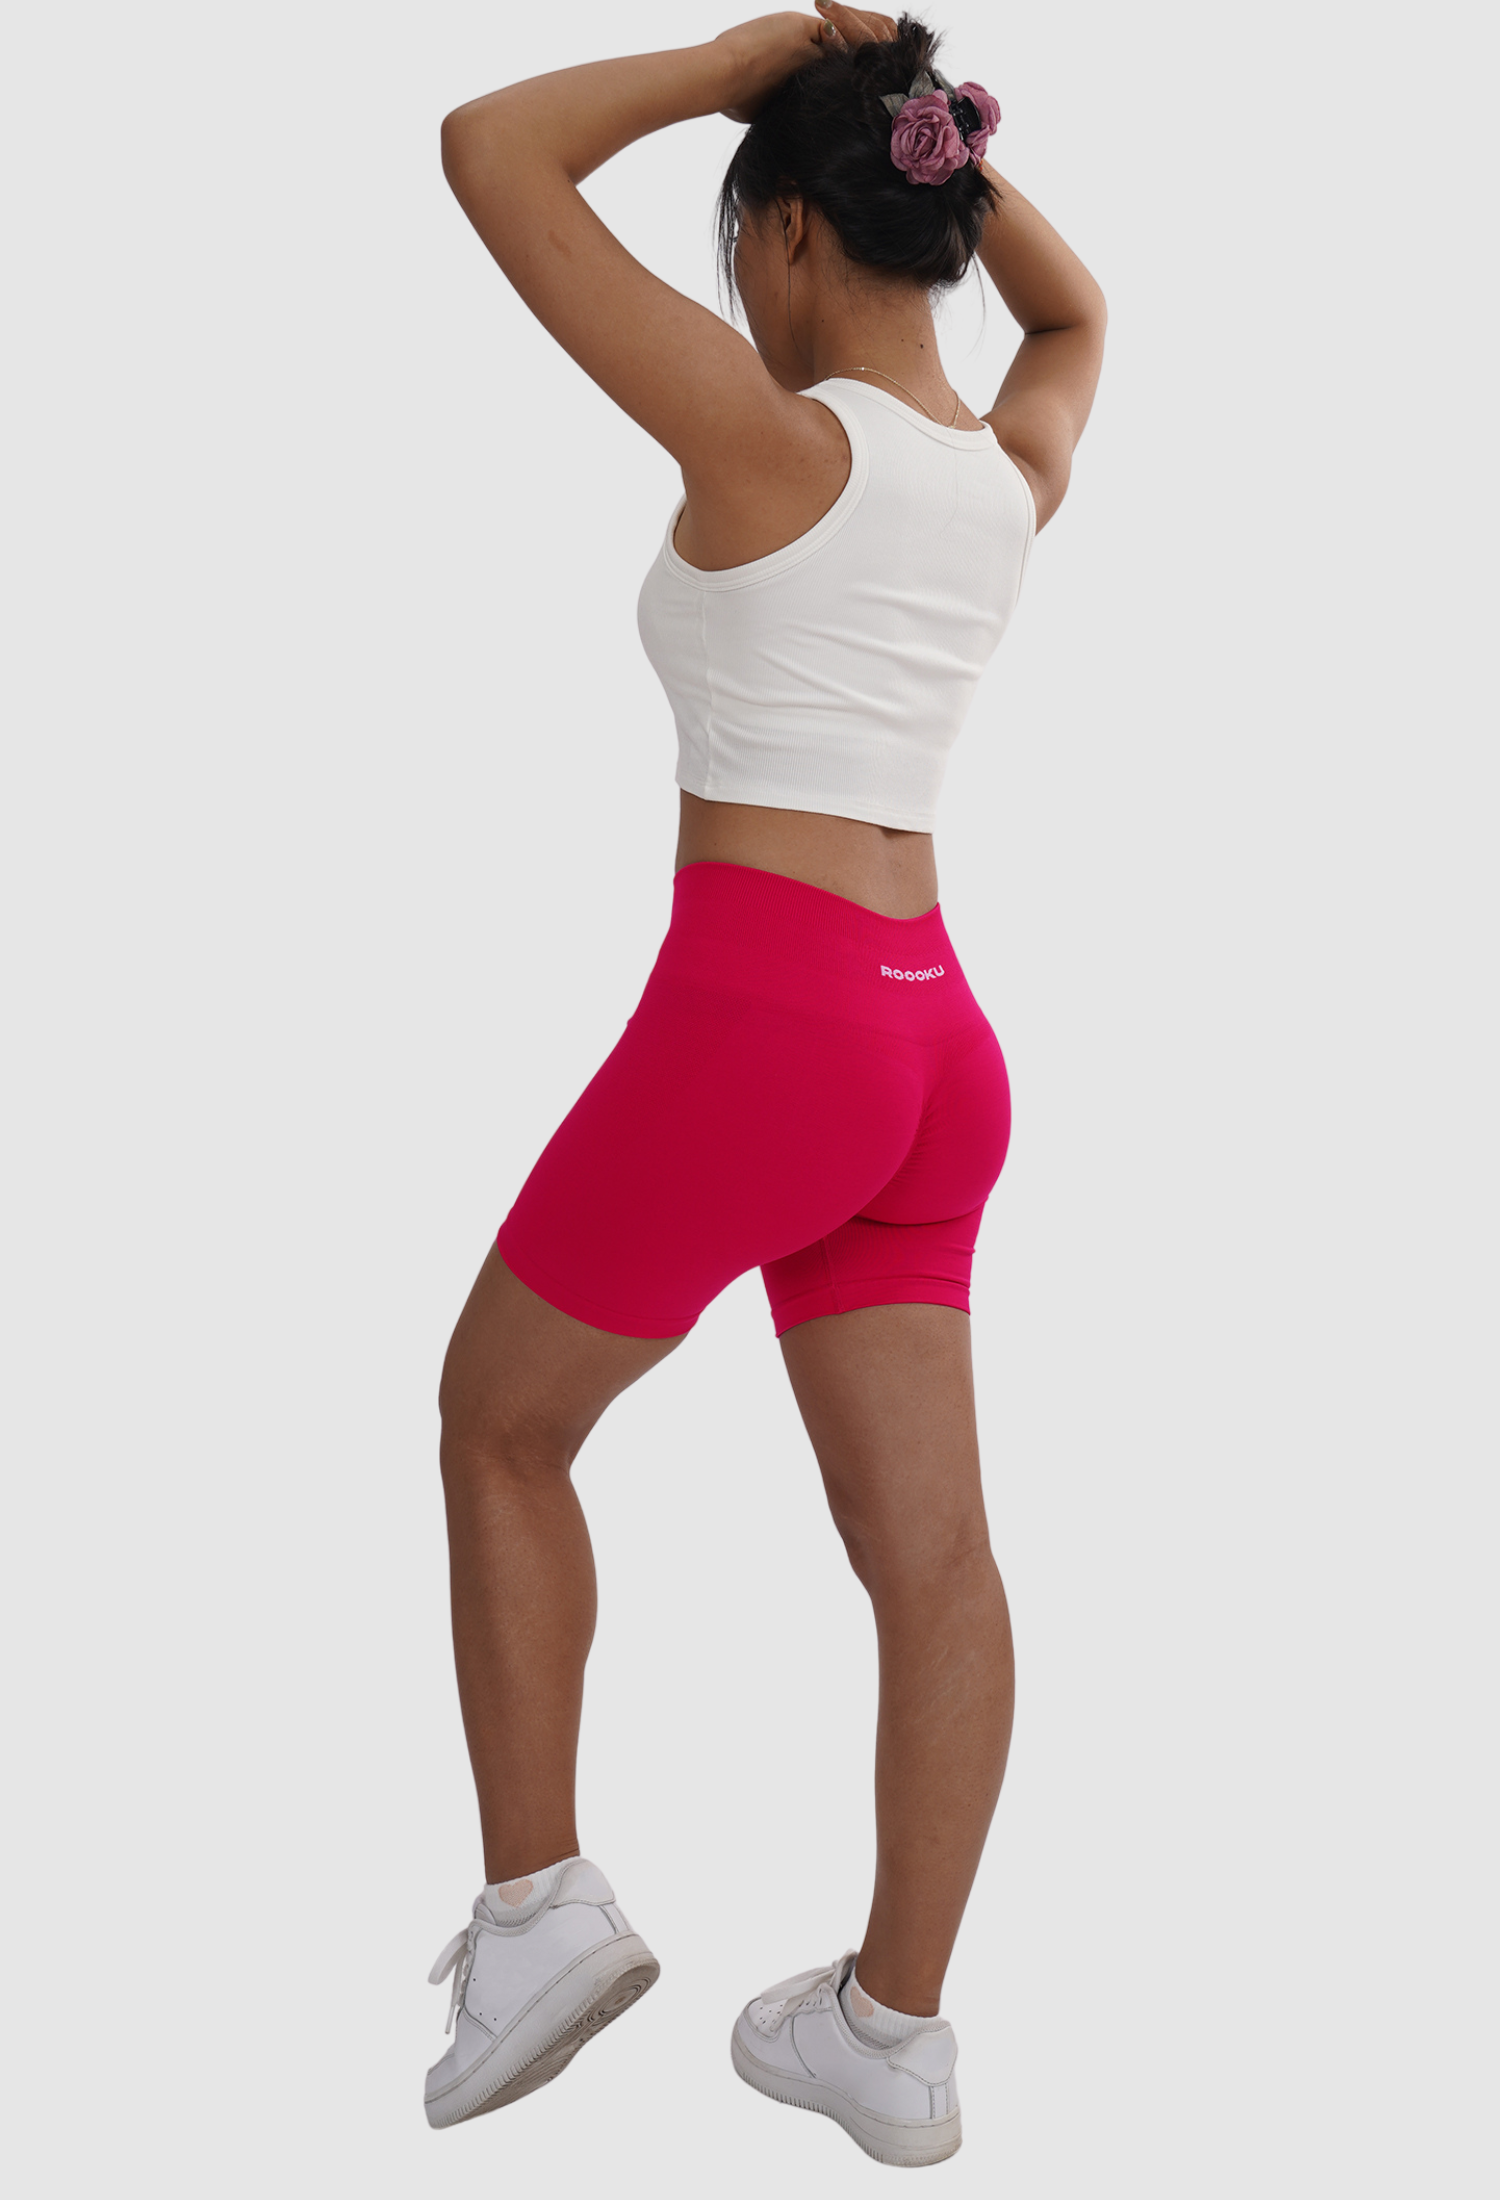 ROOOKU Gym Leggings for Women Squat Proof Workout Leggings Butt